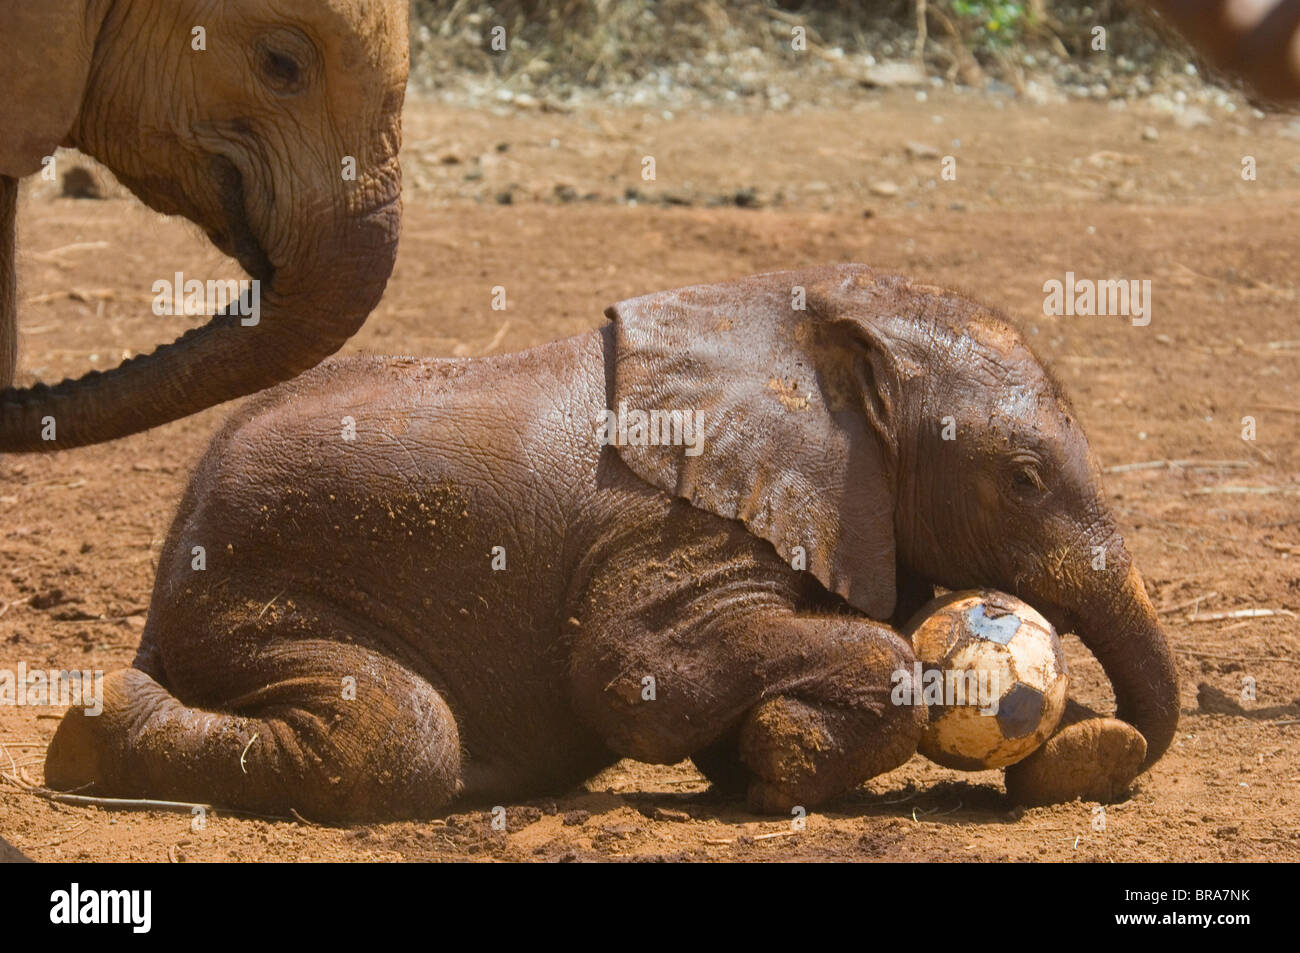 BABY ELEPHANT WITH SOCCER BALL IN MUD AT ELEPHANT ORPHANAGE OUTSIDE NAIROBI KENYA AFRICA Stock Photo